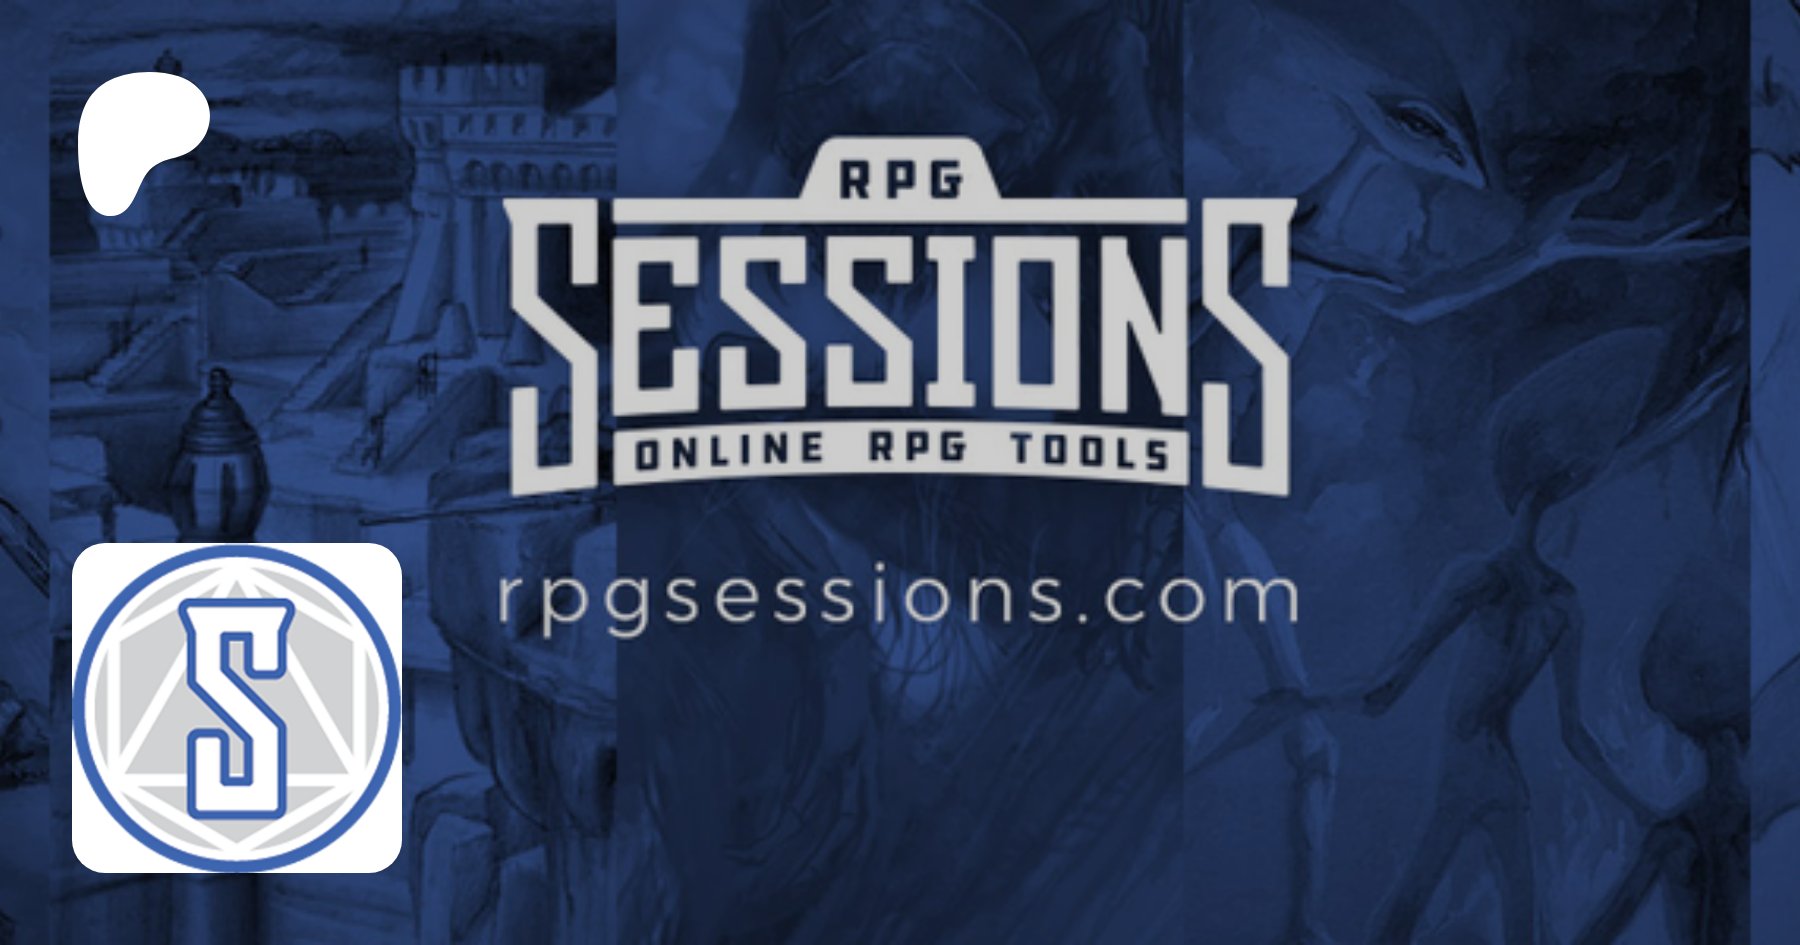 RPG Sessions